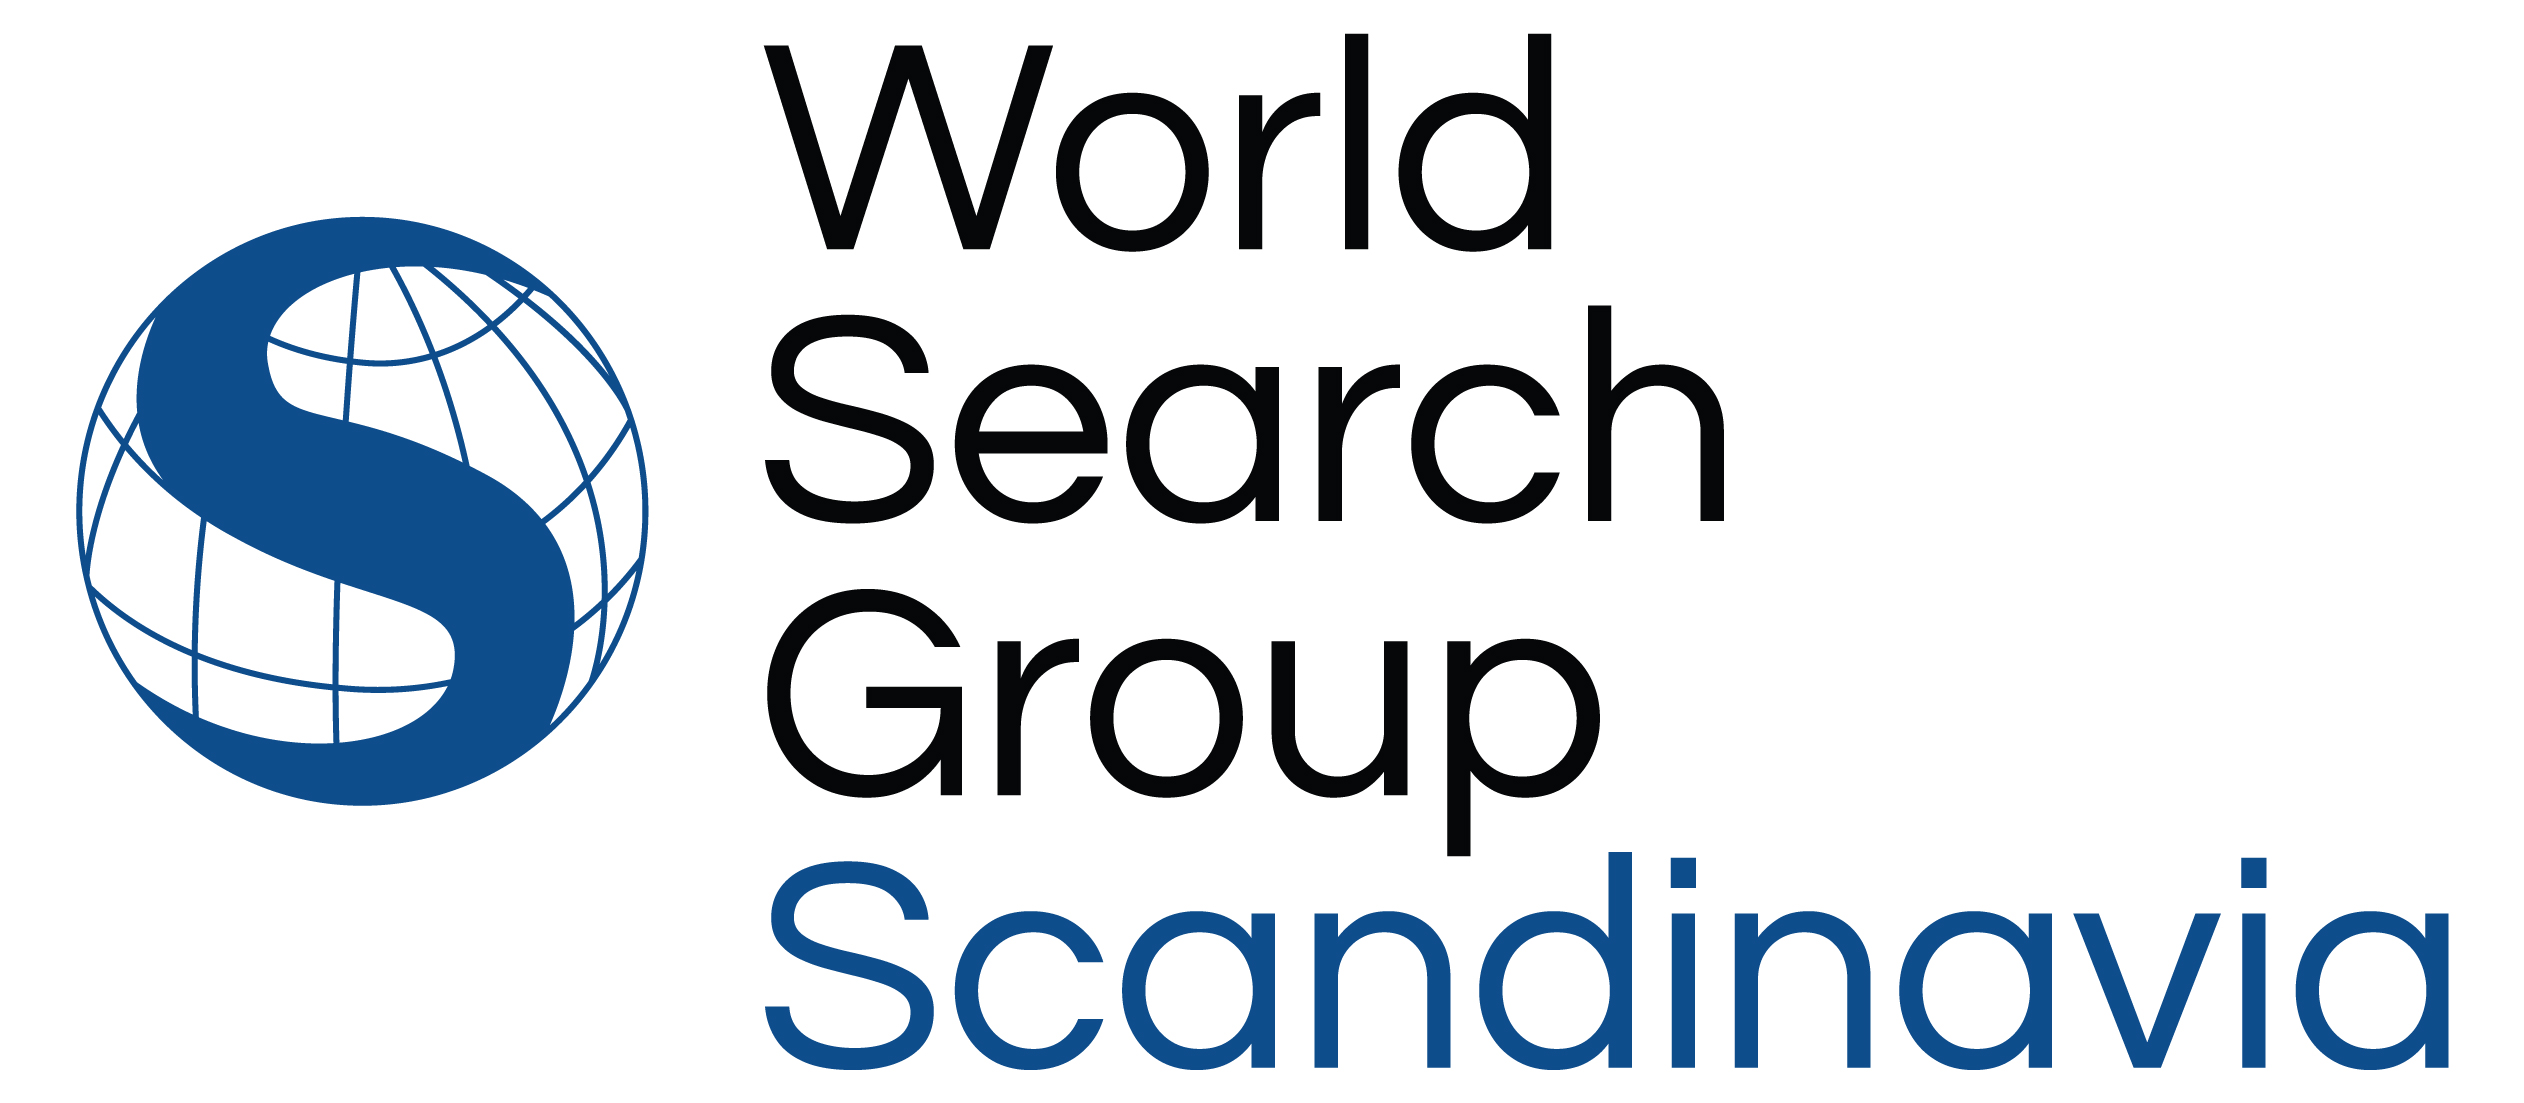 World Search Group Scandinavia